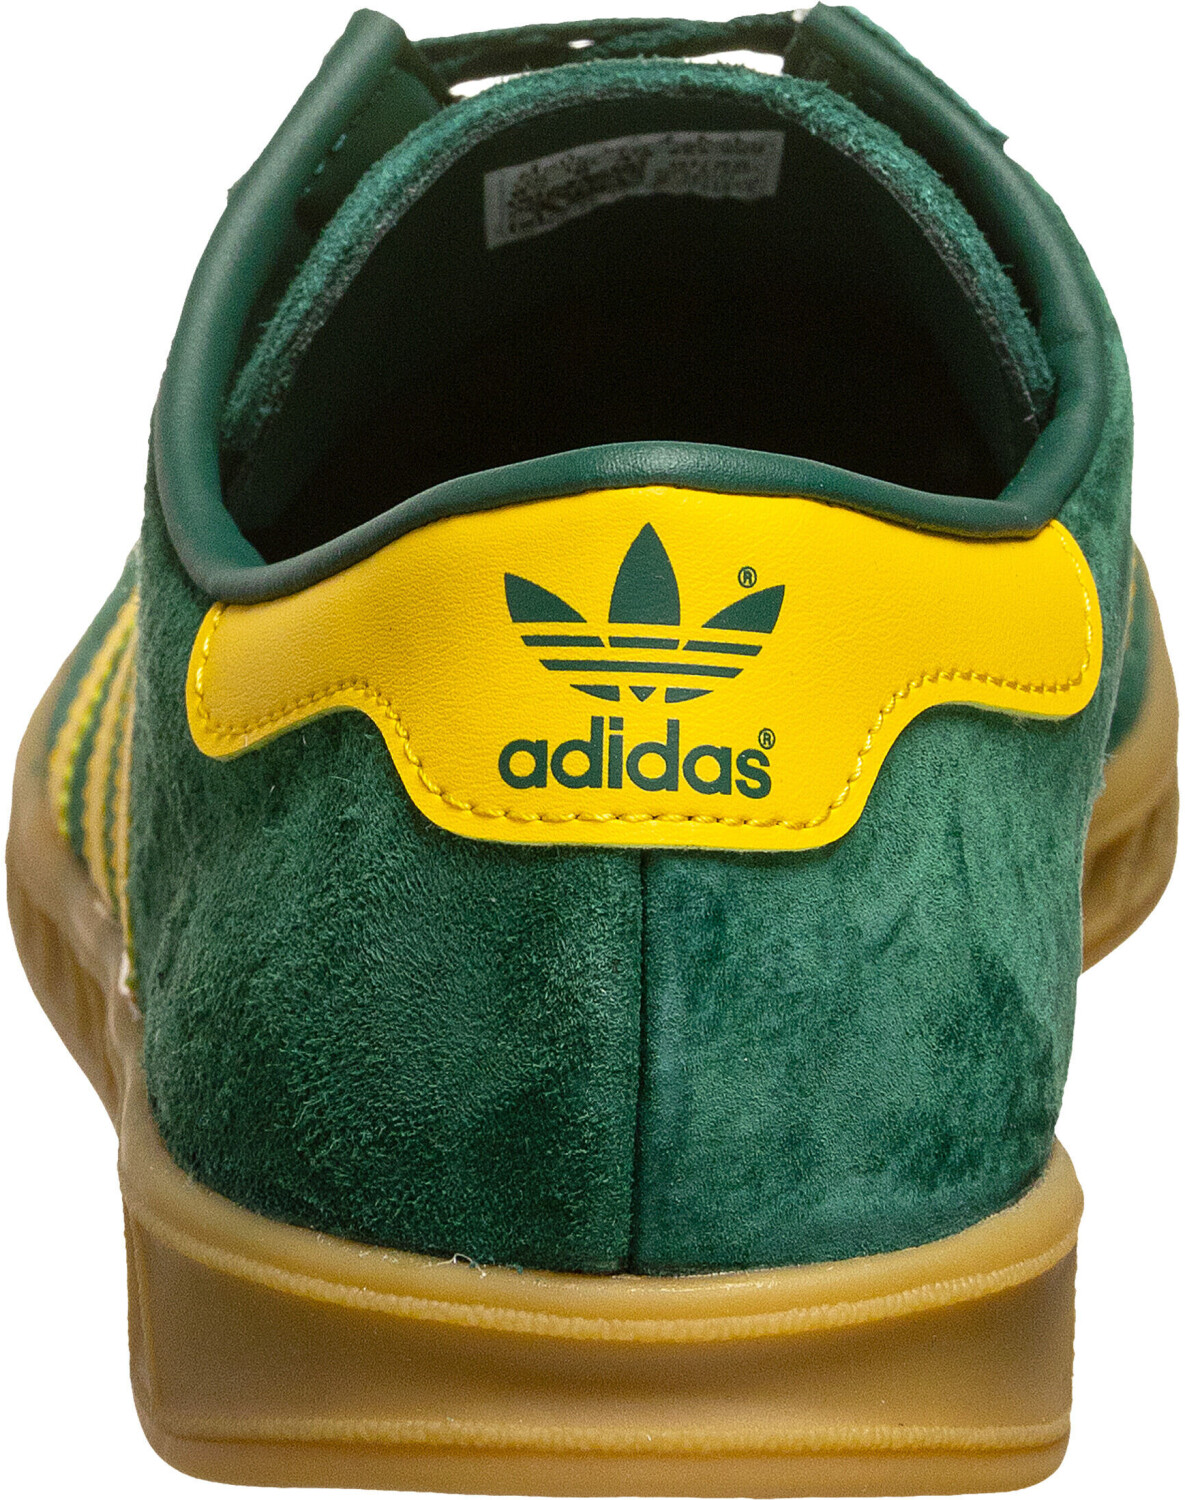 Adidas Hamburg Collegiate Green/Bold Gold/Gum from £74.99 – Best Deals on idealo.co.uk